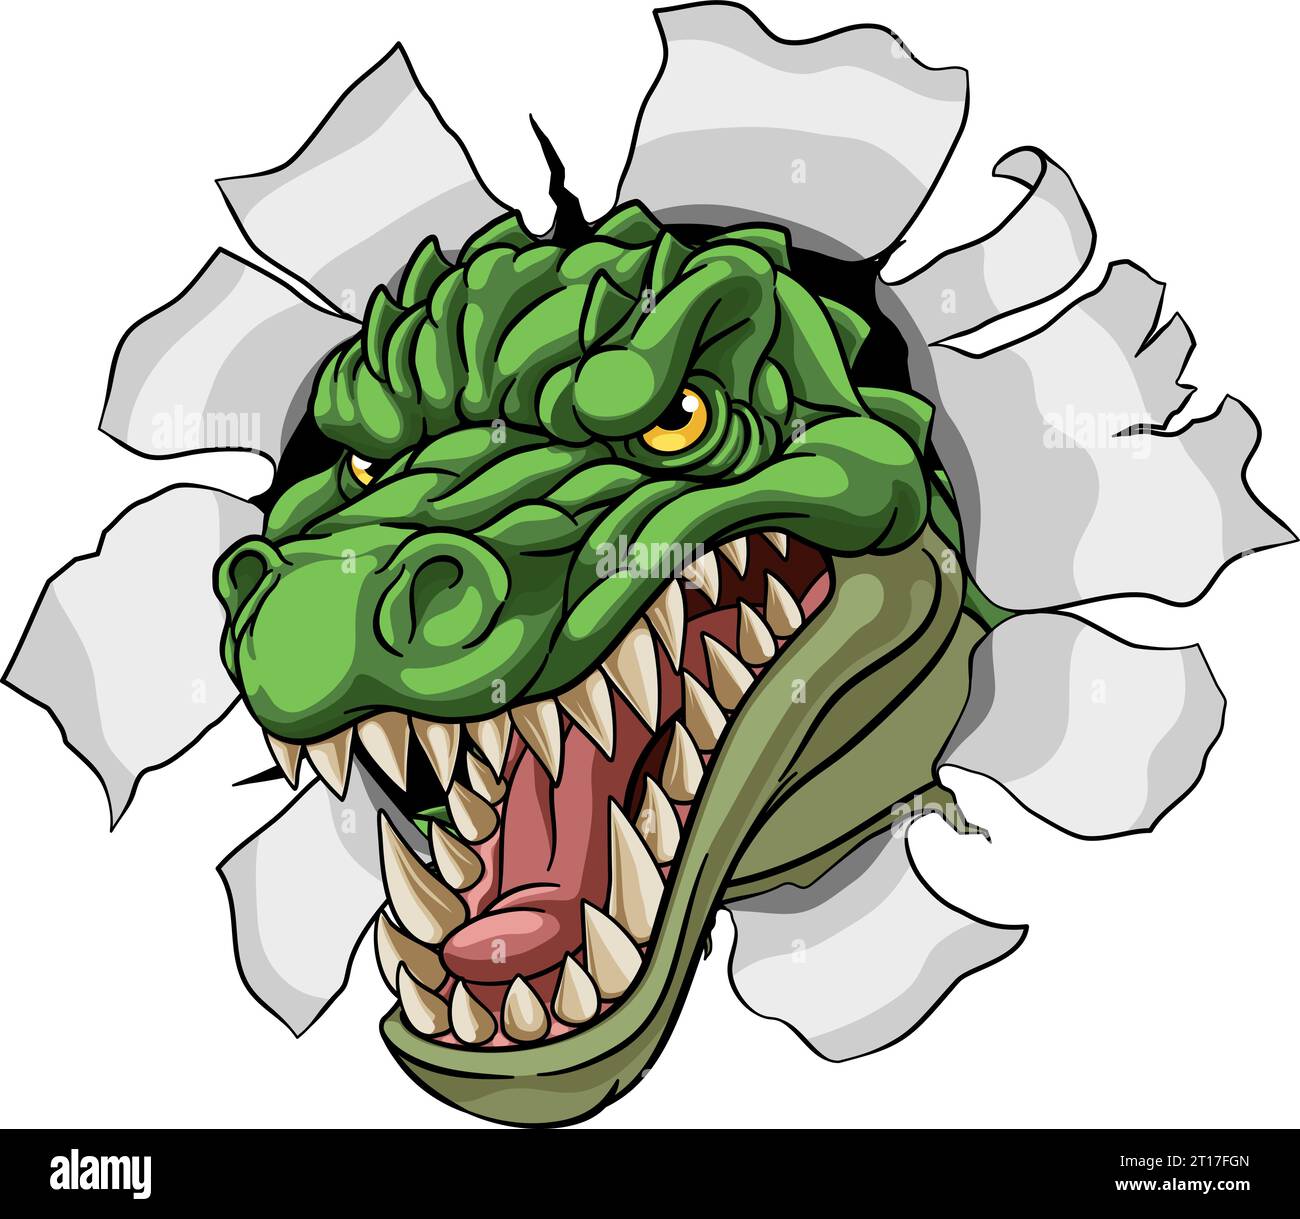 Dinosaure Crocodile Alligator Lizard Mascot Sports Mascot Illustration de Vecteur